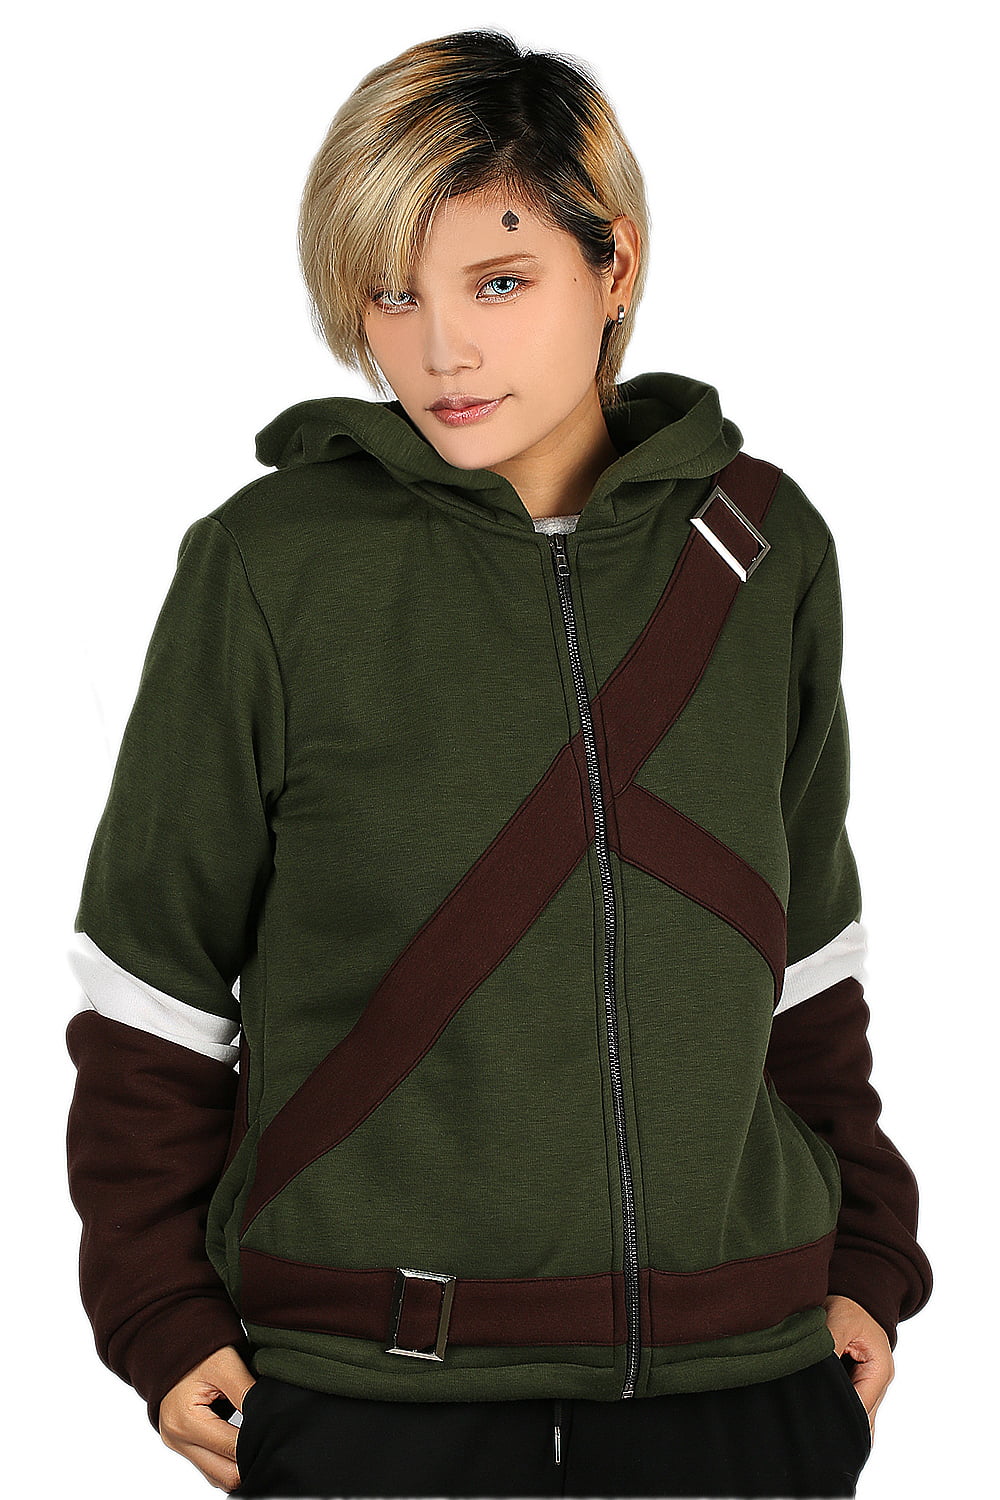 Ya-cos Zelda Costume Link Hooded Sweater Hyrule Warriors Zipper Coat Jacket Green for Girl Boy